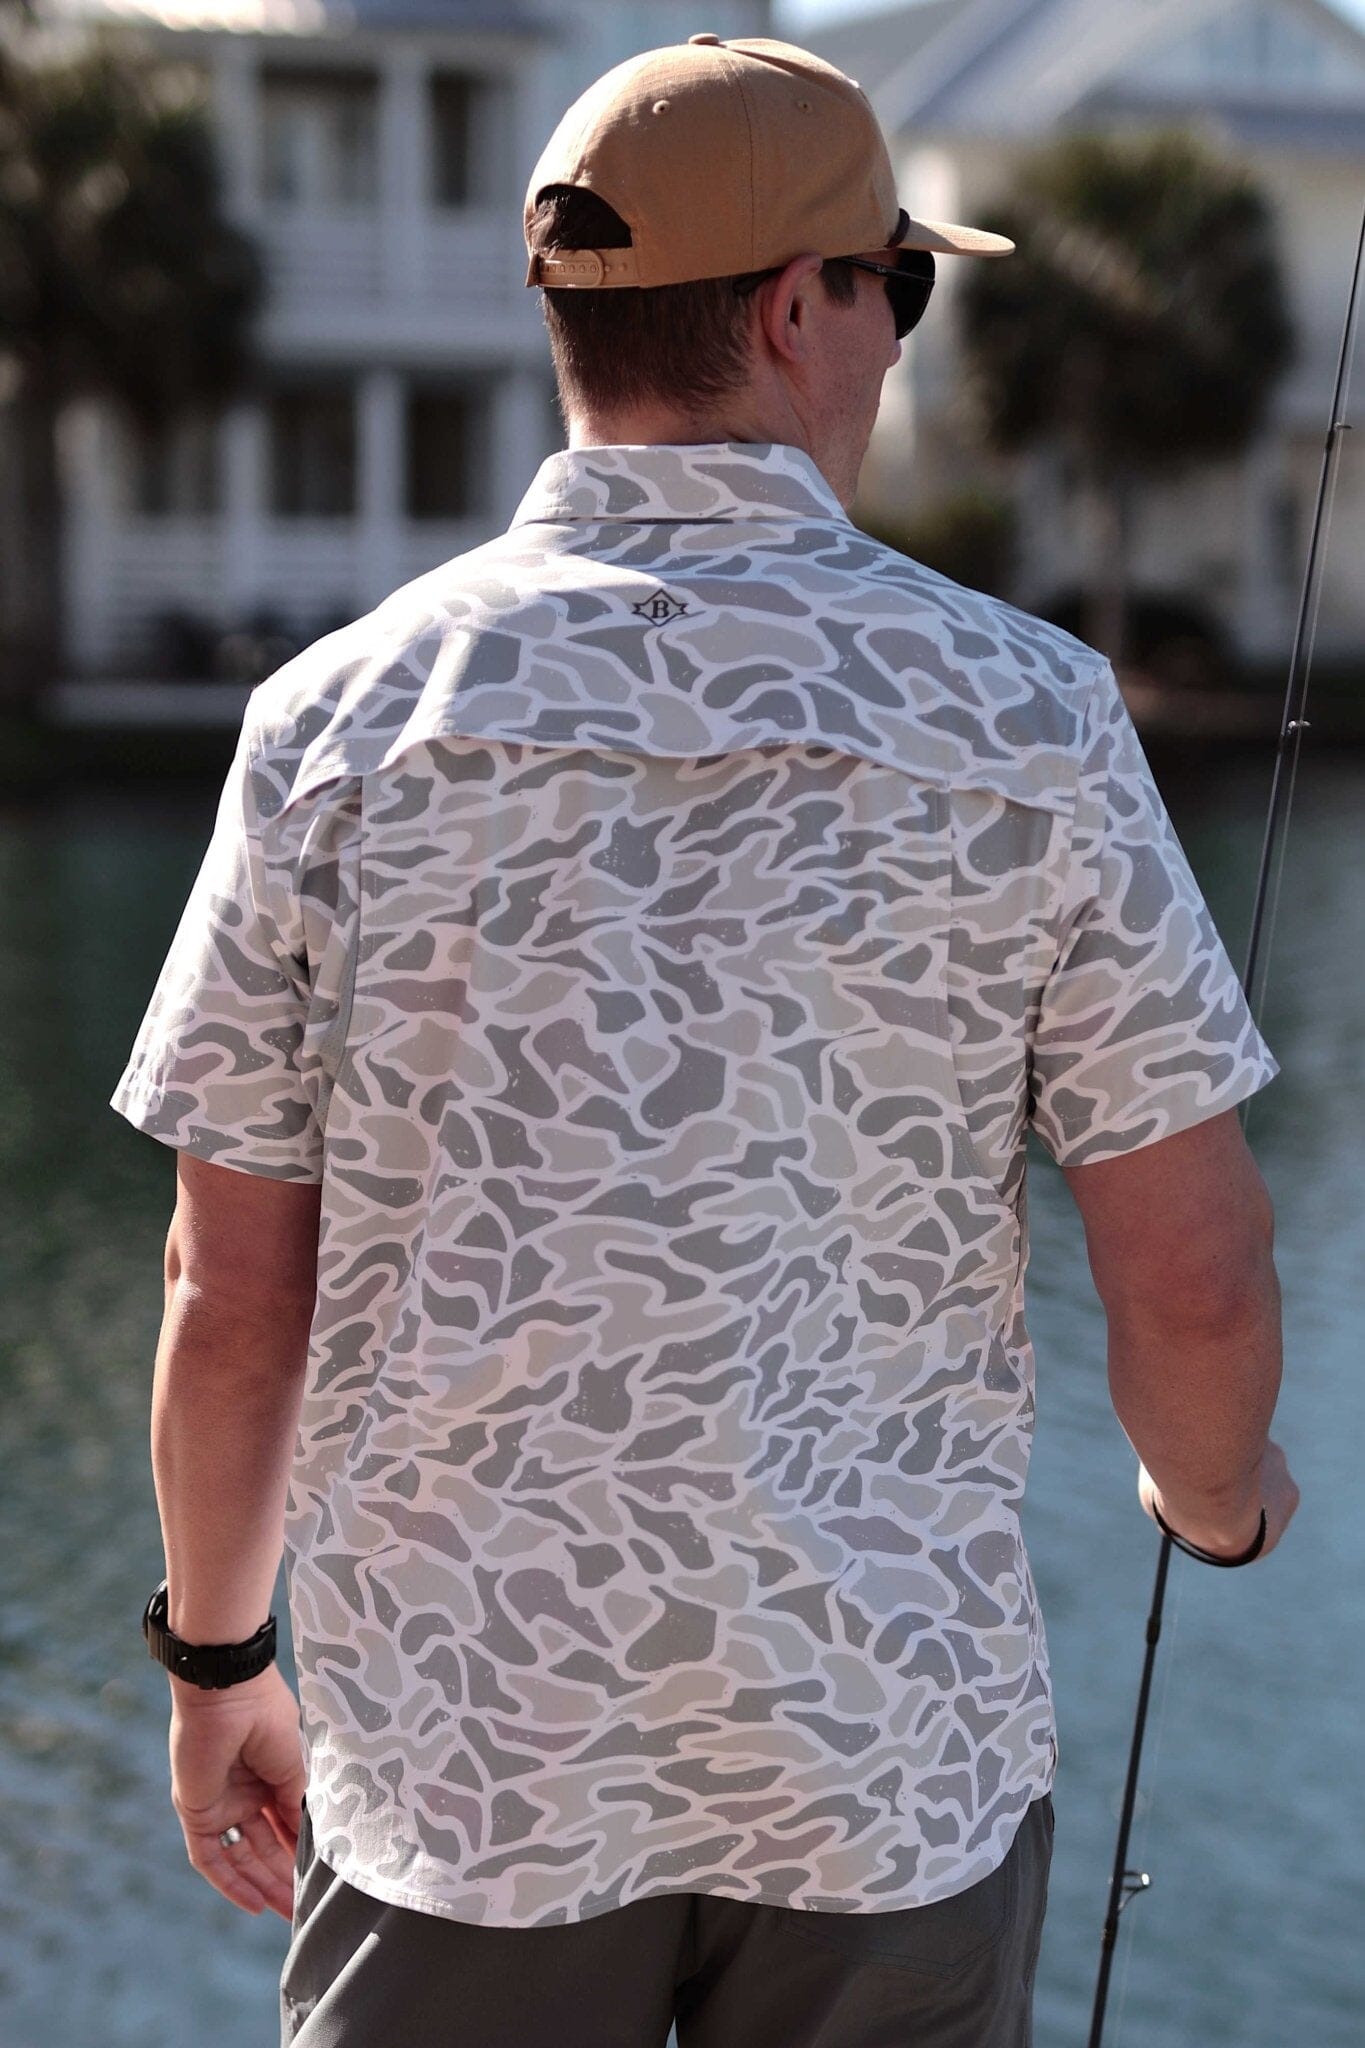 Hydrotech Camo Long Sleeve Performance Fishing Shirt - Sportsman Gear Blue Bird / Medium